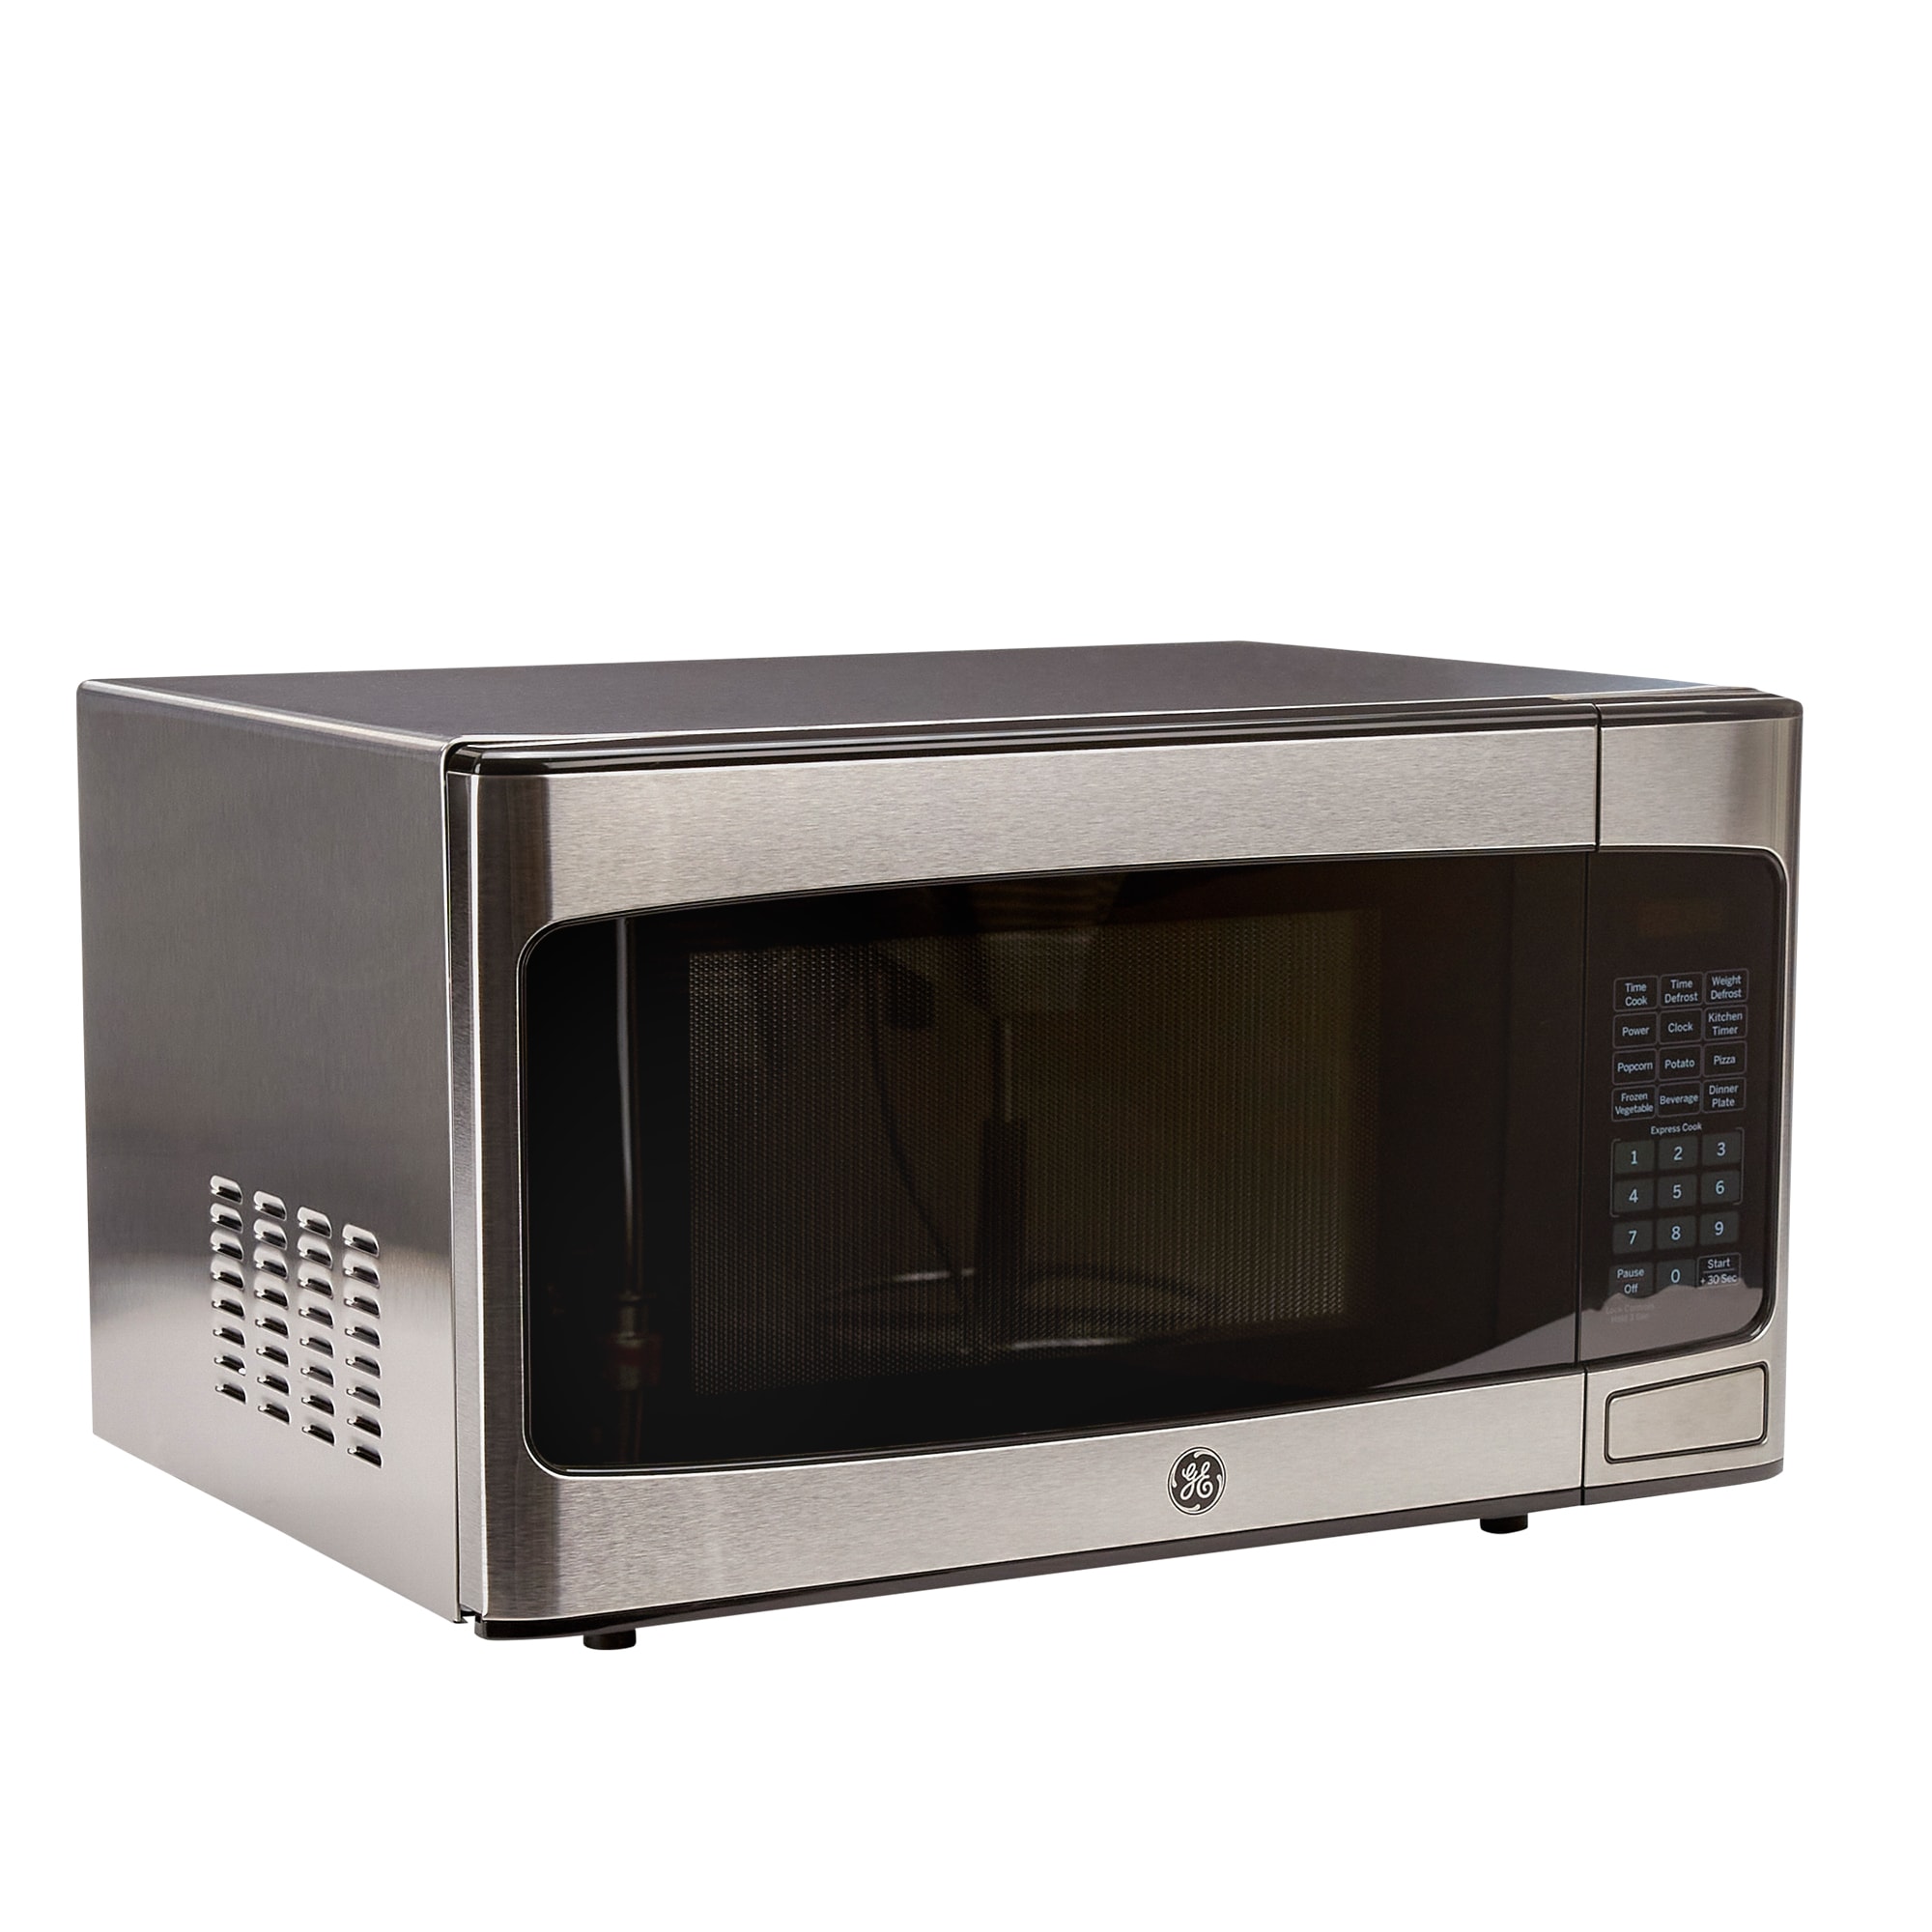 GE 1.1 cu. ft. Countertop Microwave in Stainless Steel JES1145SHSS